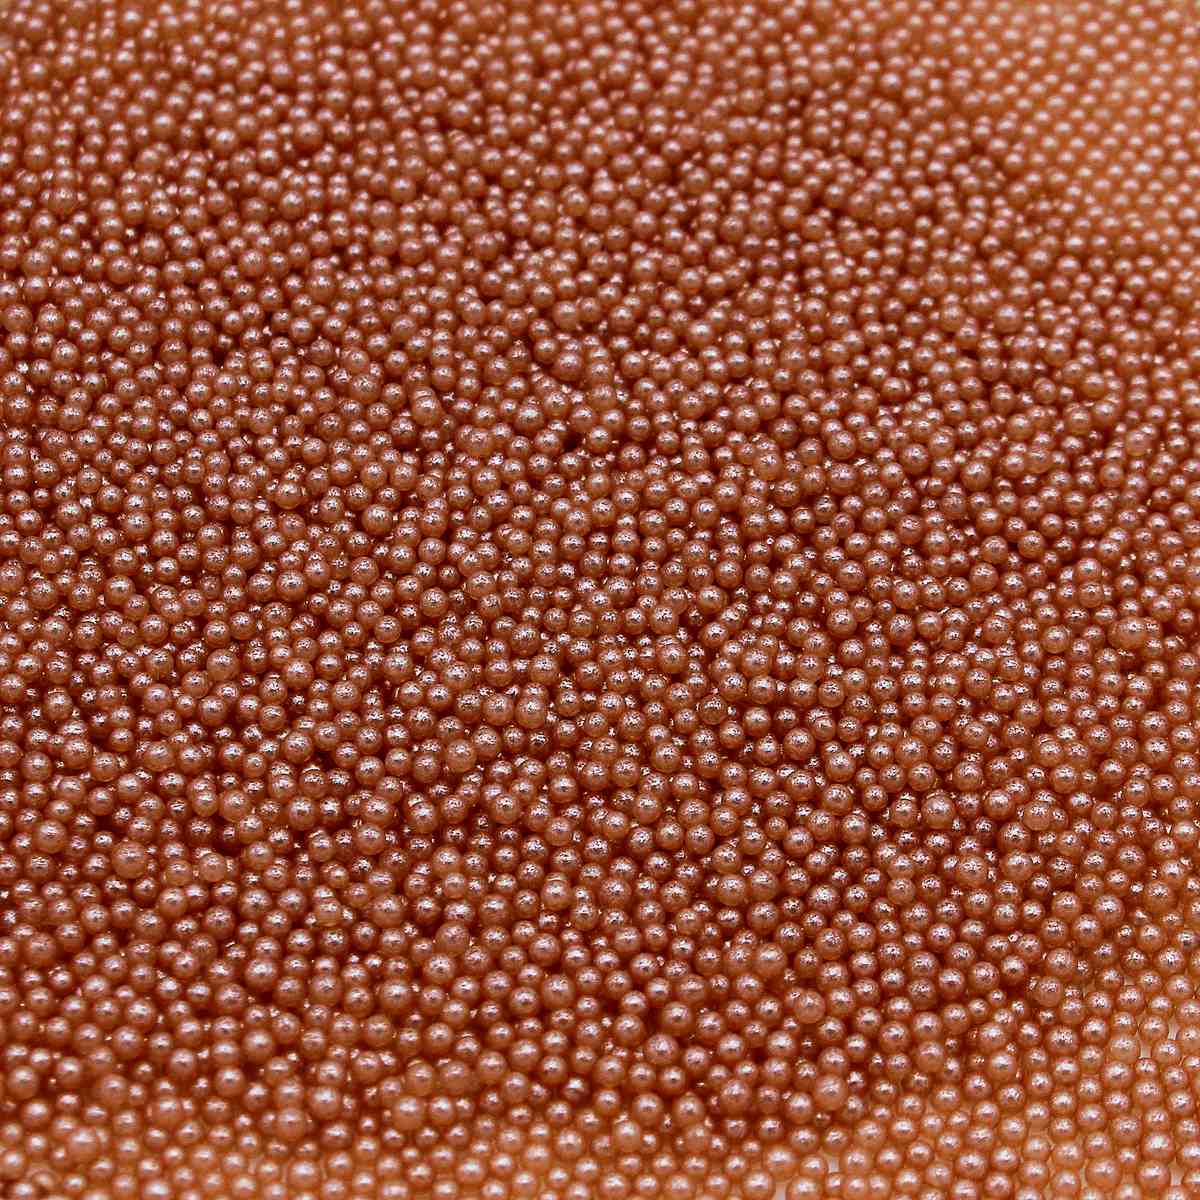 jags-mumbai Beads Micro Mini Pearl Beads 45gm Net Orange